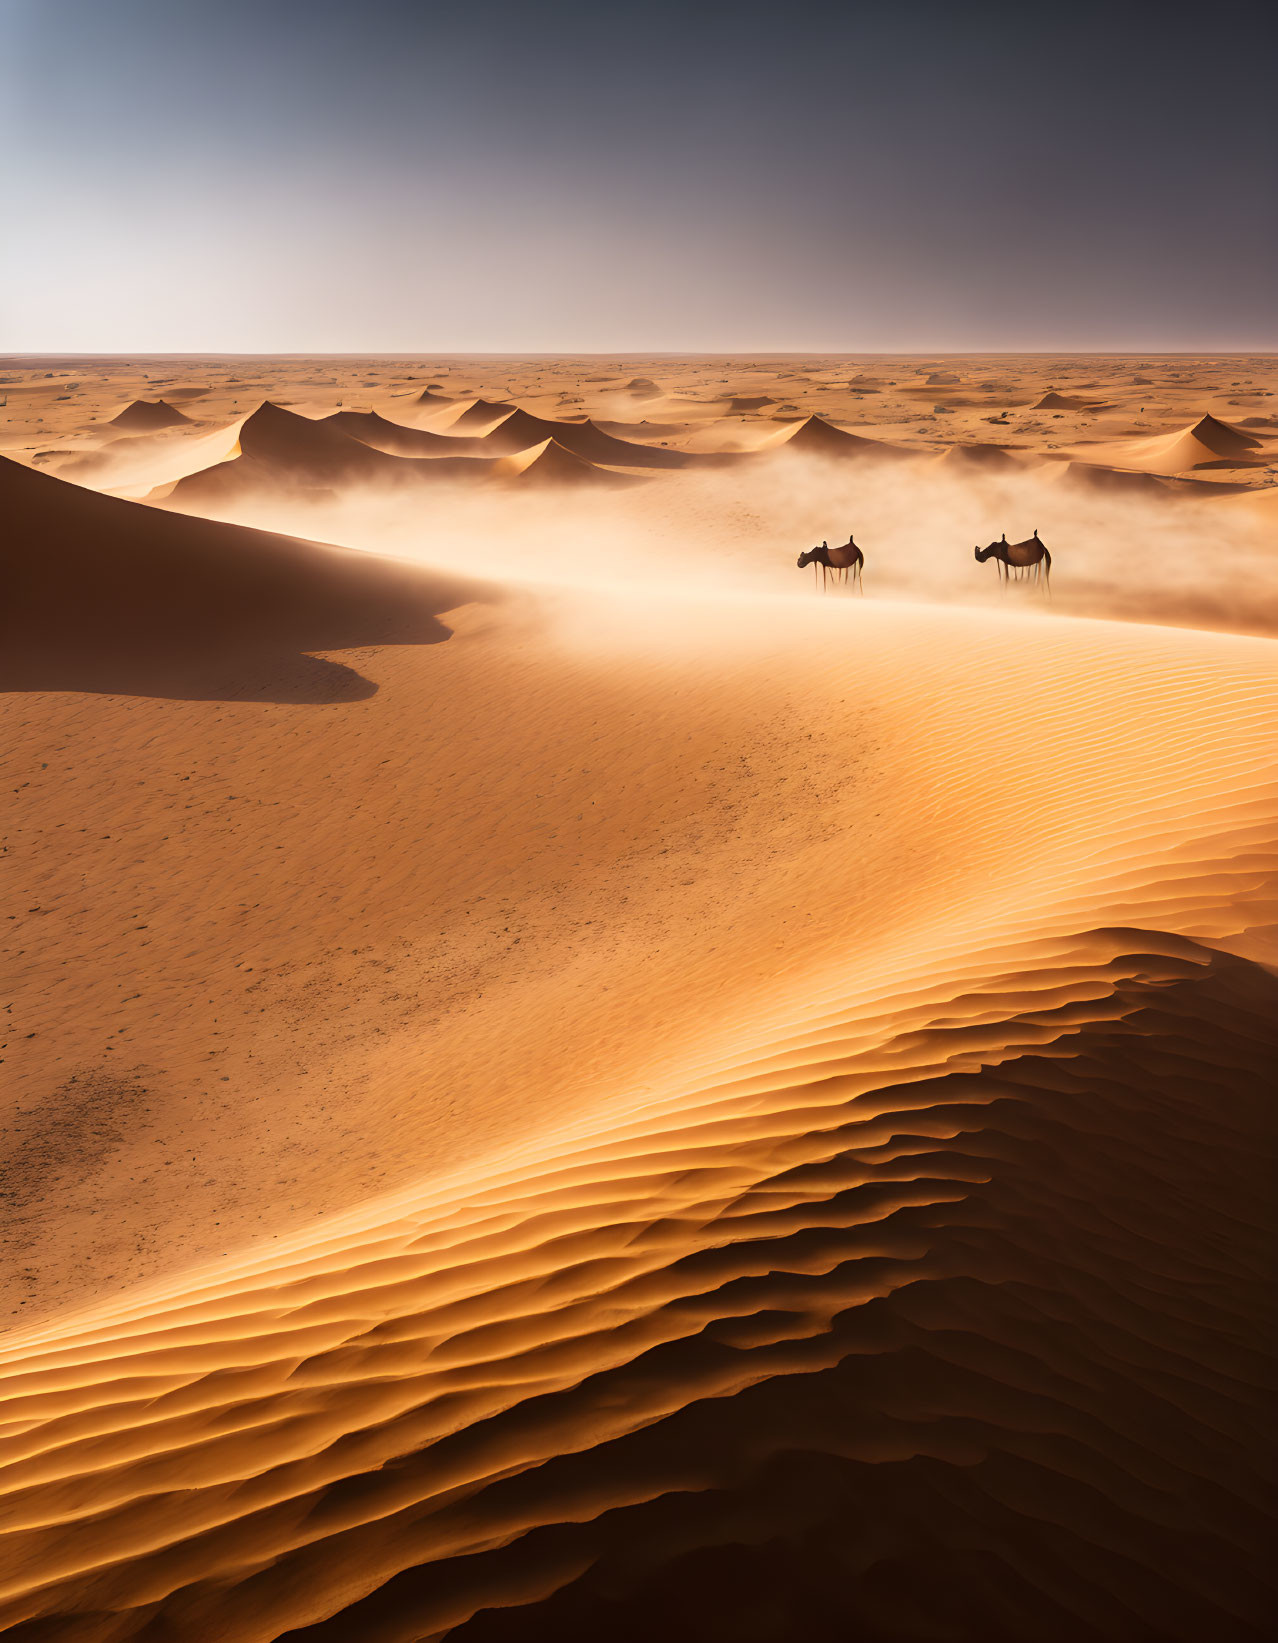 Sandstorm approaching on a desert